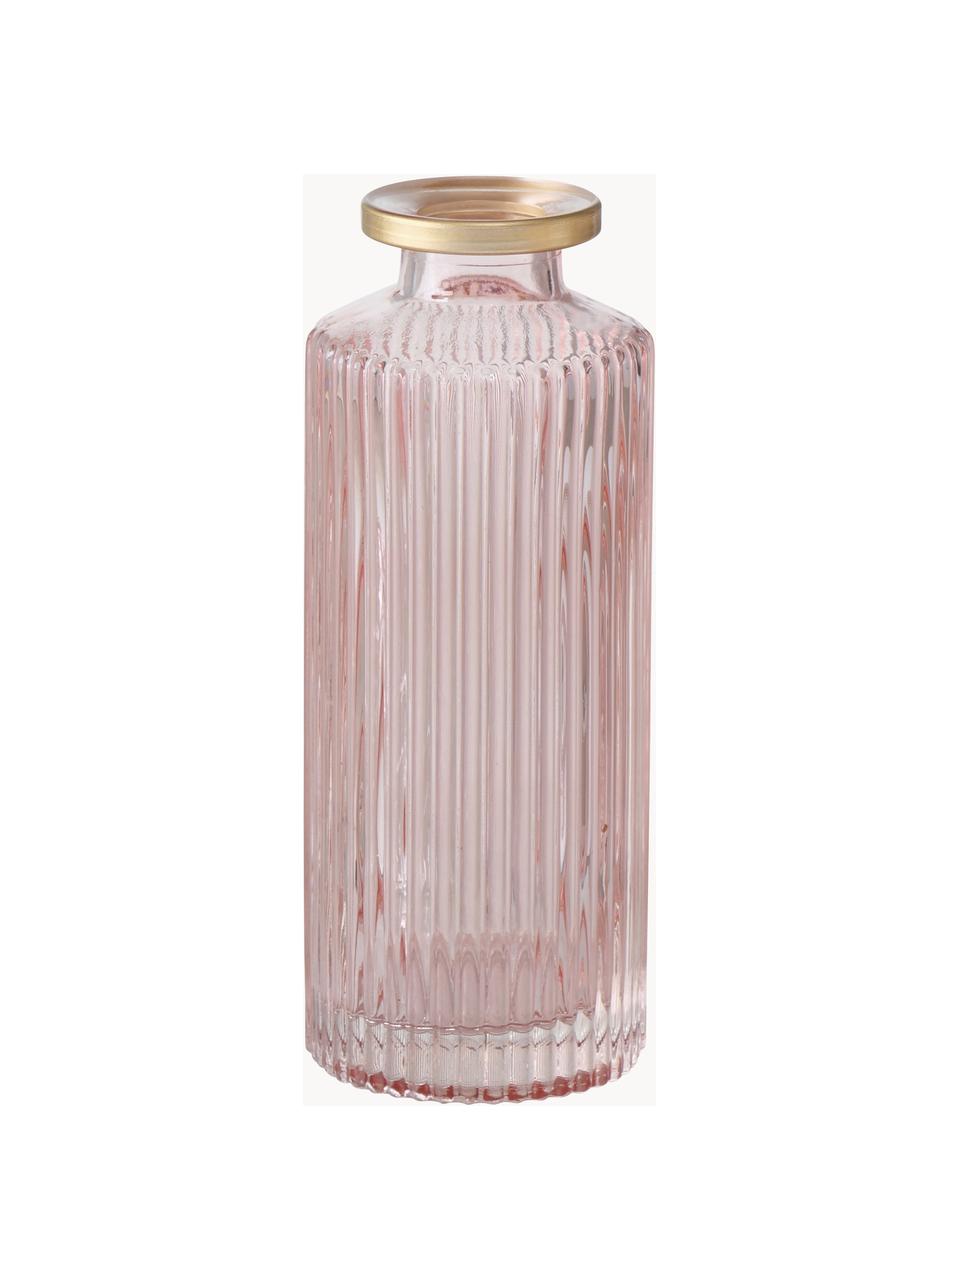 Kleine vazen Adore van glas, set van 3, Glas, geverfd, Lichtroze, transparant, zilverkleurig, Ø 5 x H 13 cm